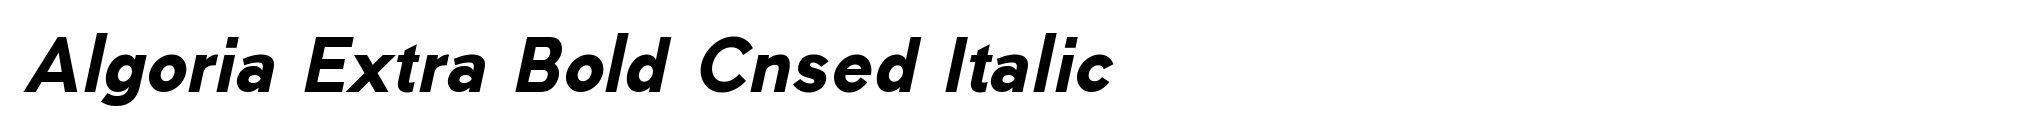 Algoria Extra Bold Cnsed Italic image